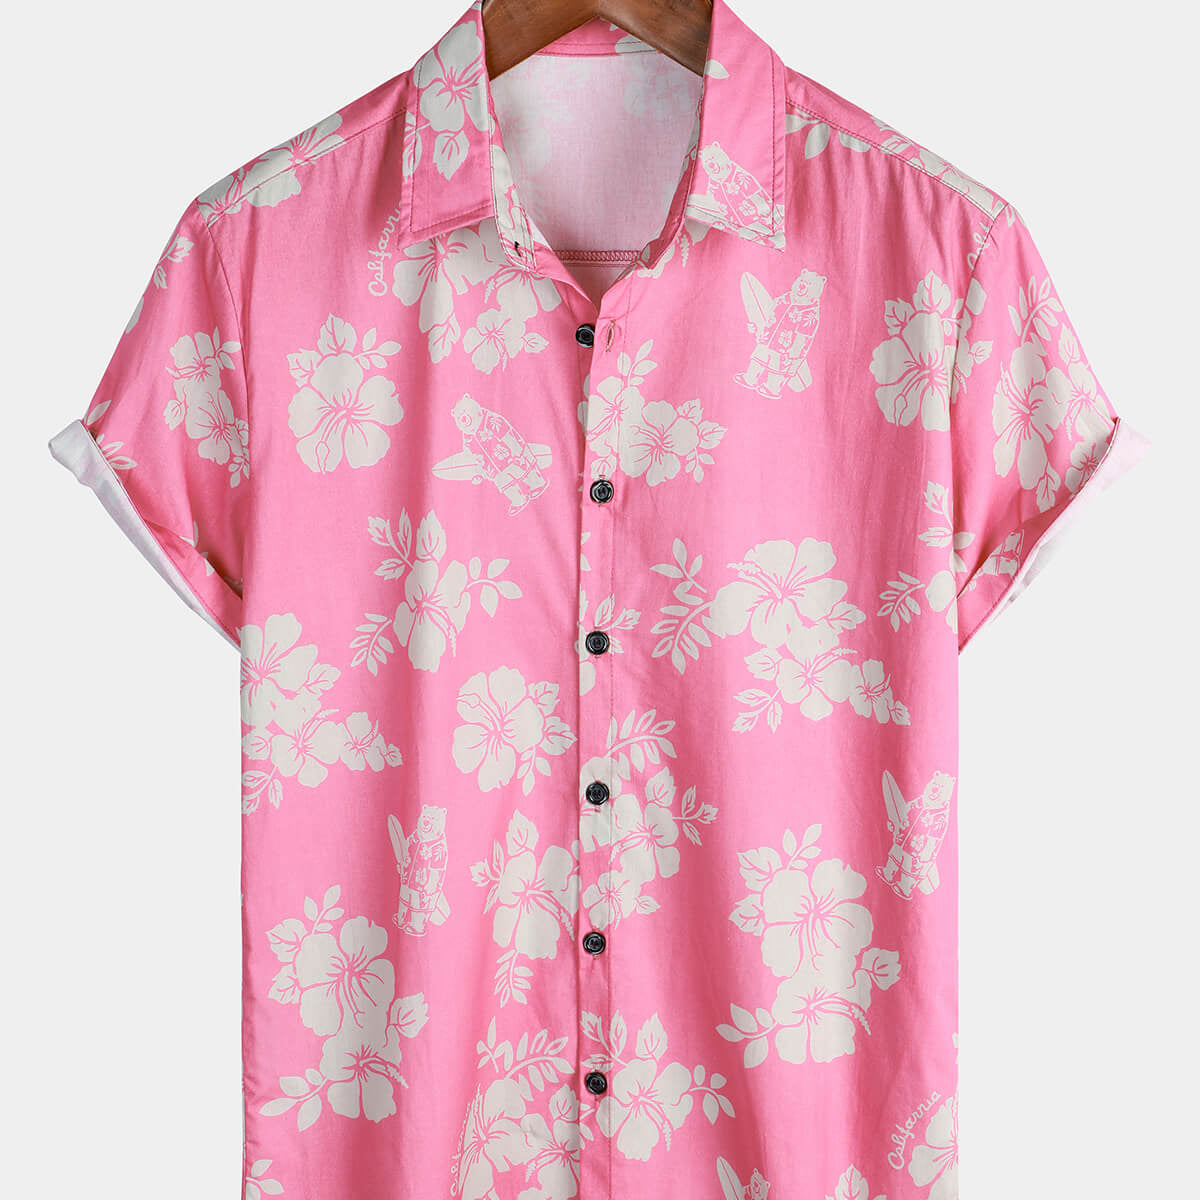 Men's Floral Pink Hawaiian Short Sleeve Shirt